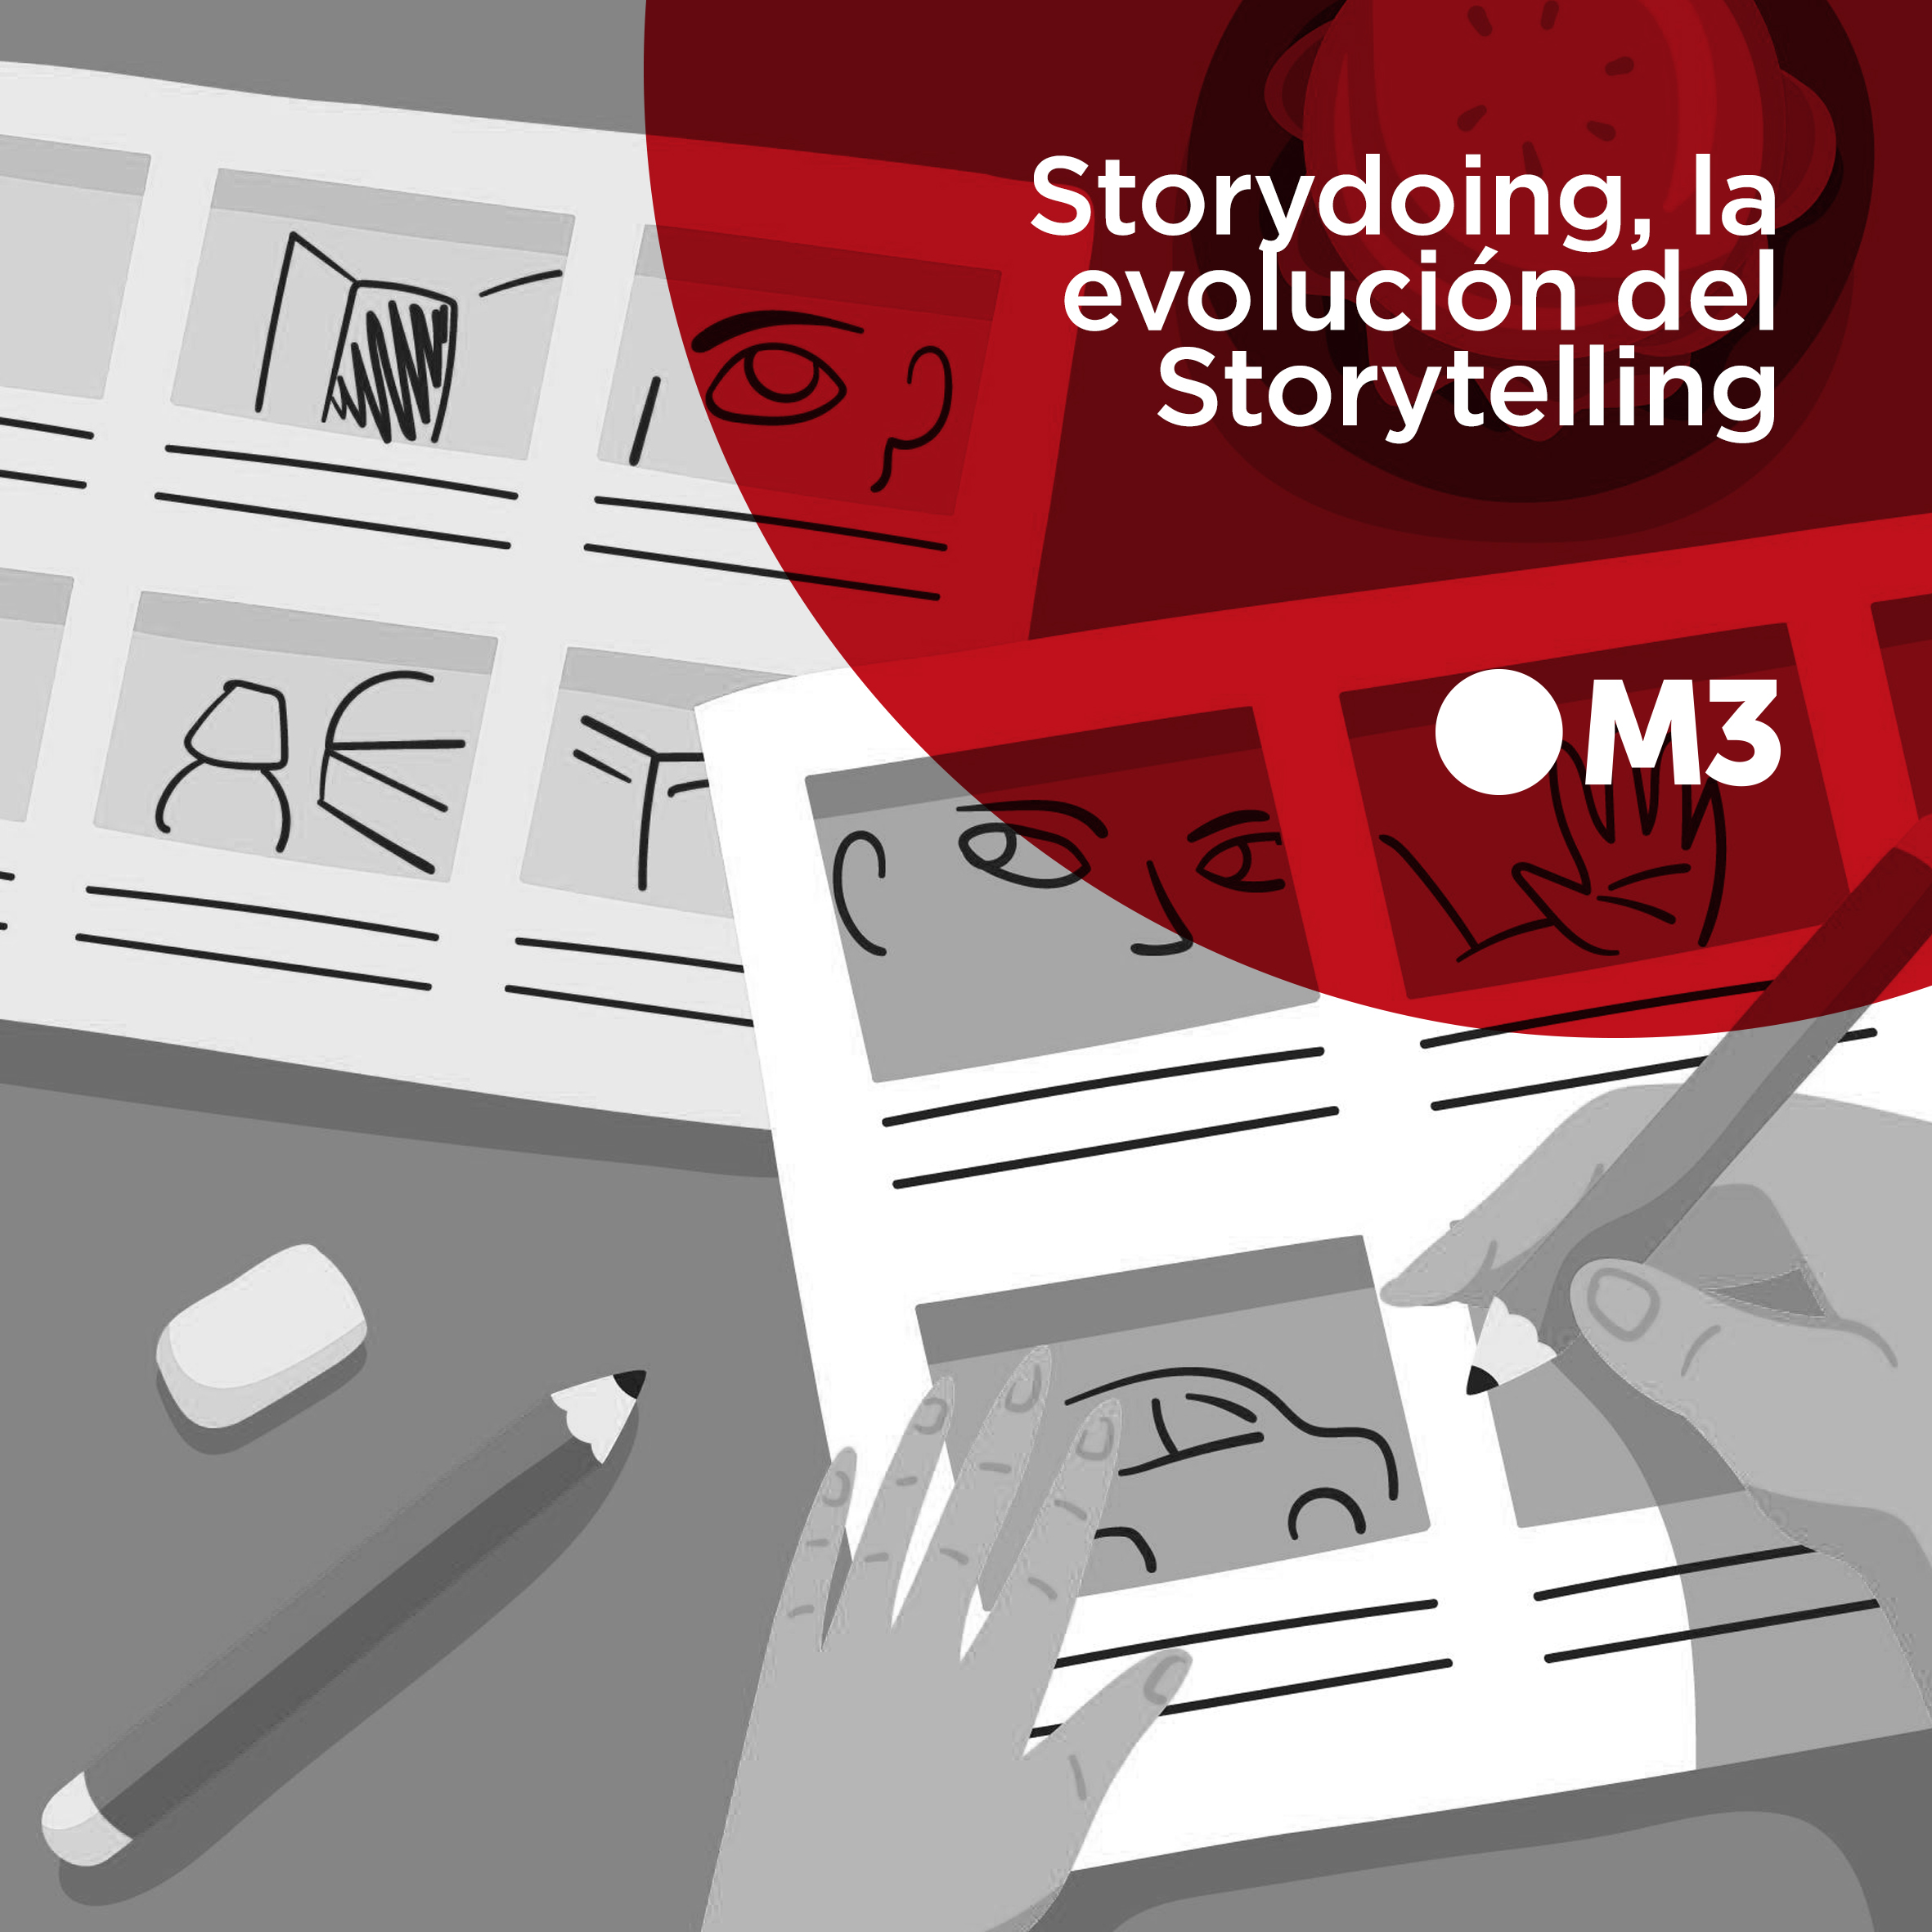 Storydoing, la evolución del Storytelling